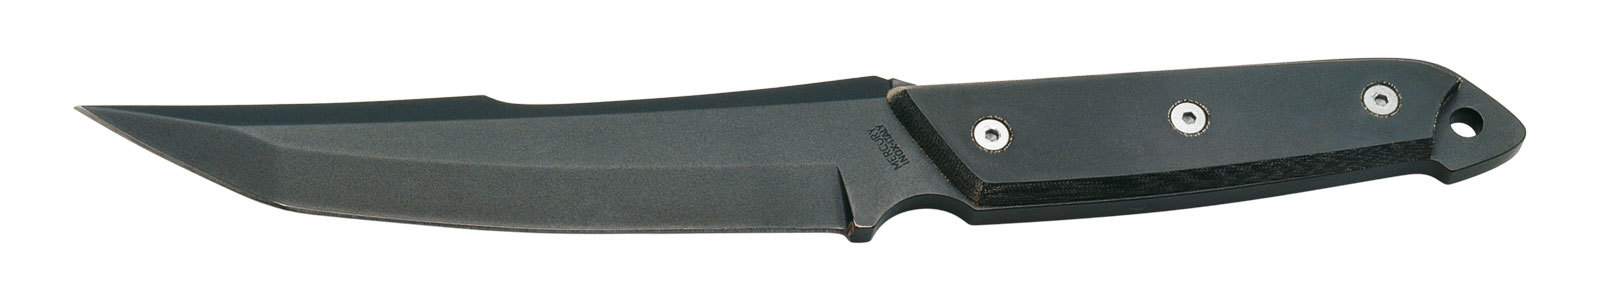 Нож с фиксированным клинком Remington Дракон (Mercury Dragon) MY\922-22T - фото 2